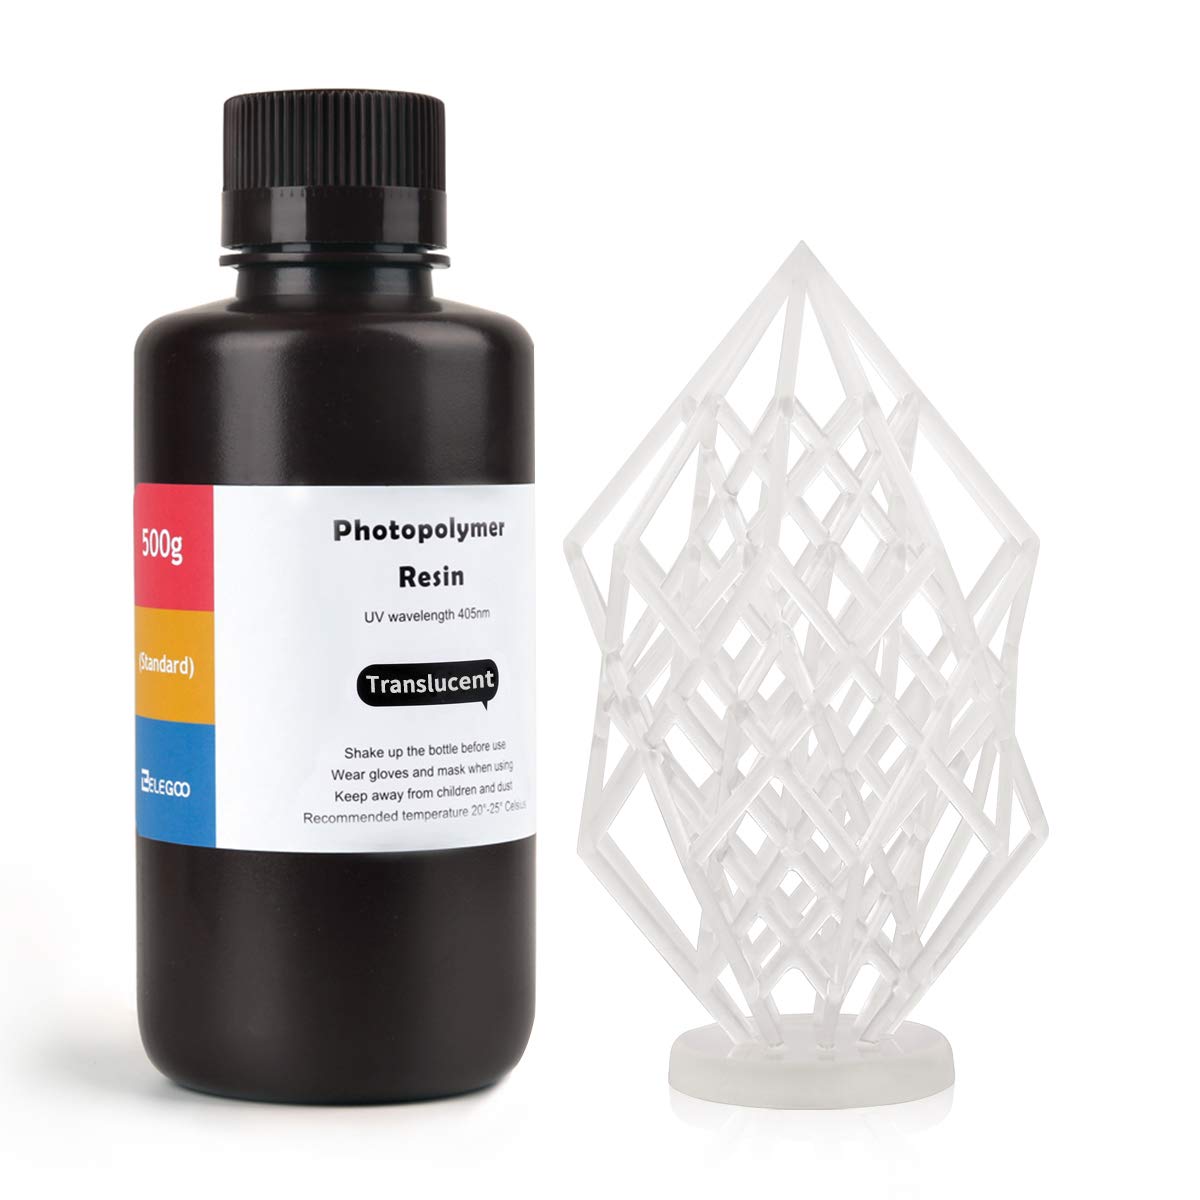 ELEGOO Photopolymer Resin UV-Curing 405nm for DLP 3D Printing 500g